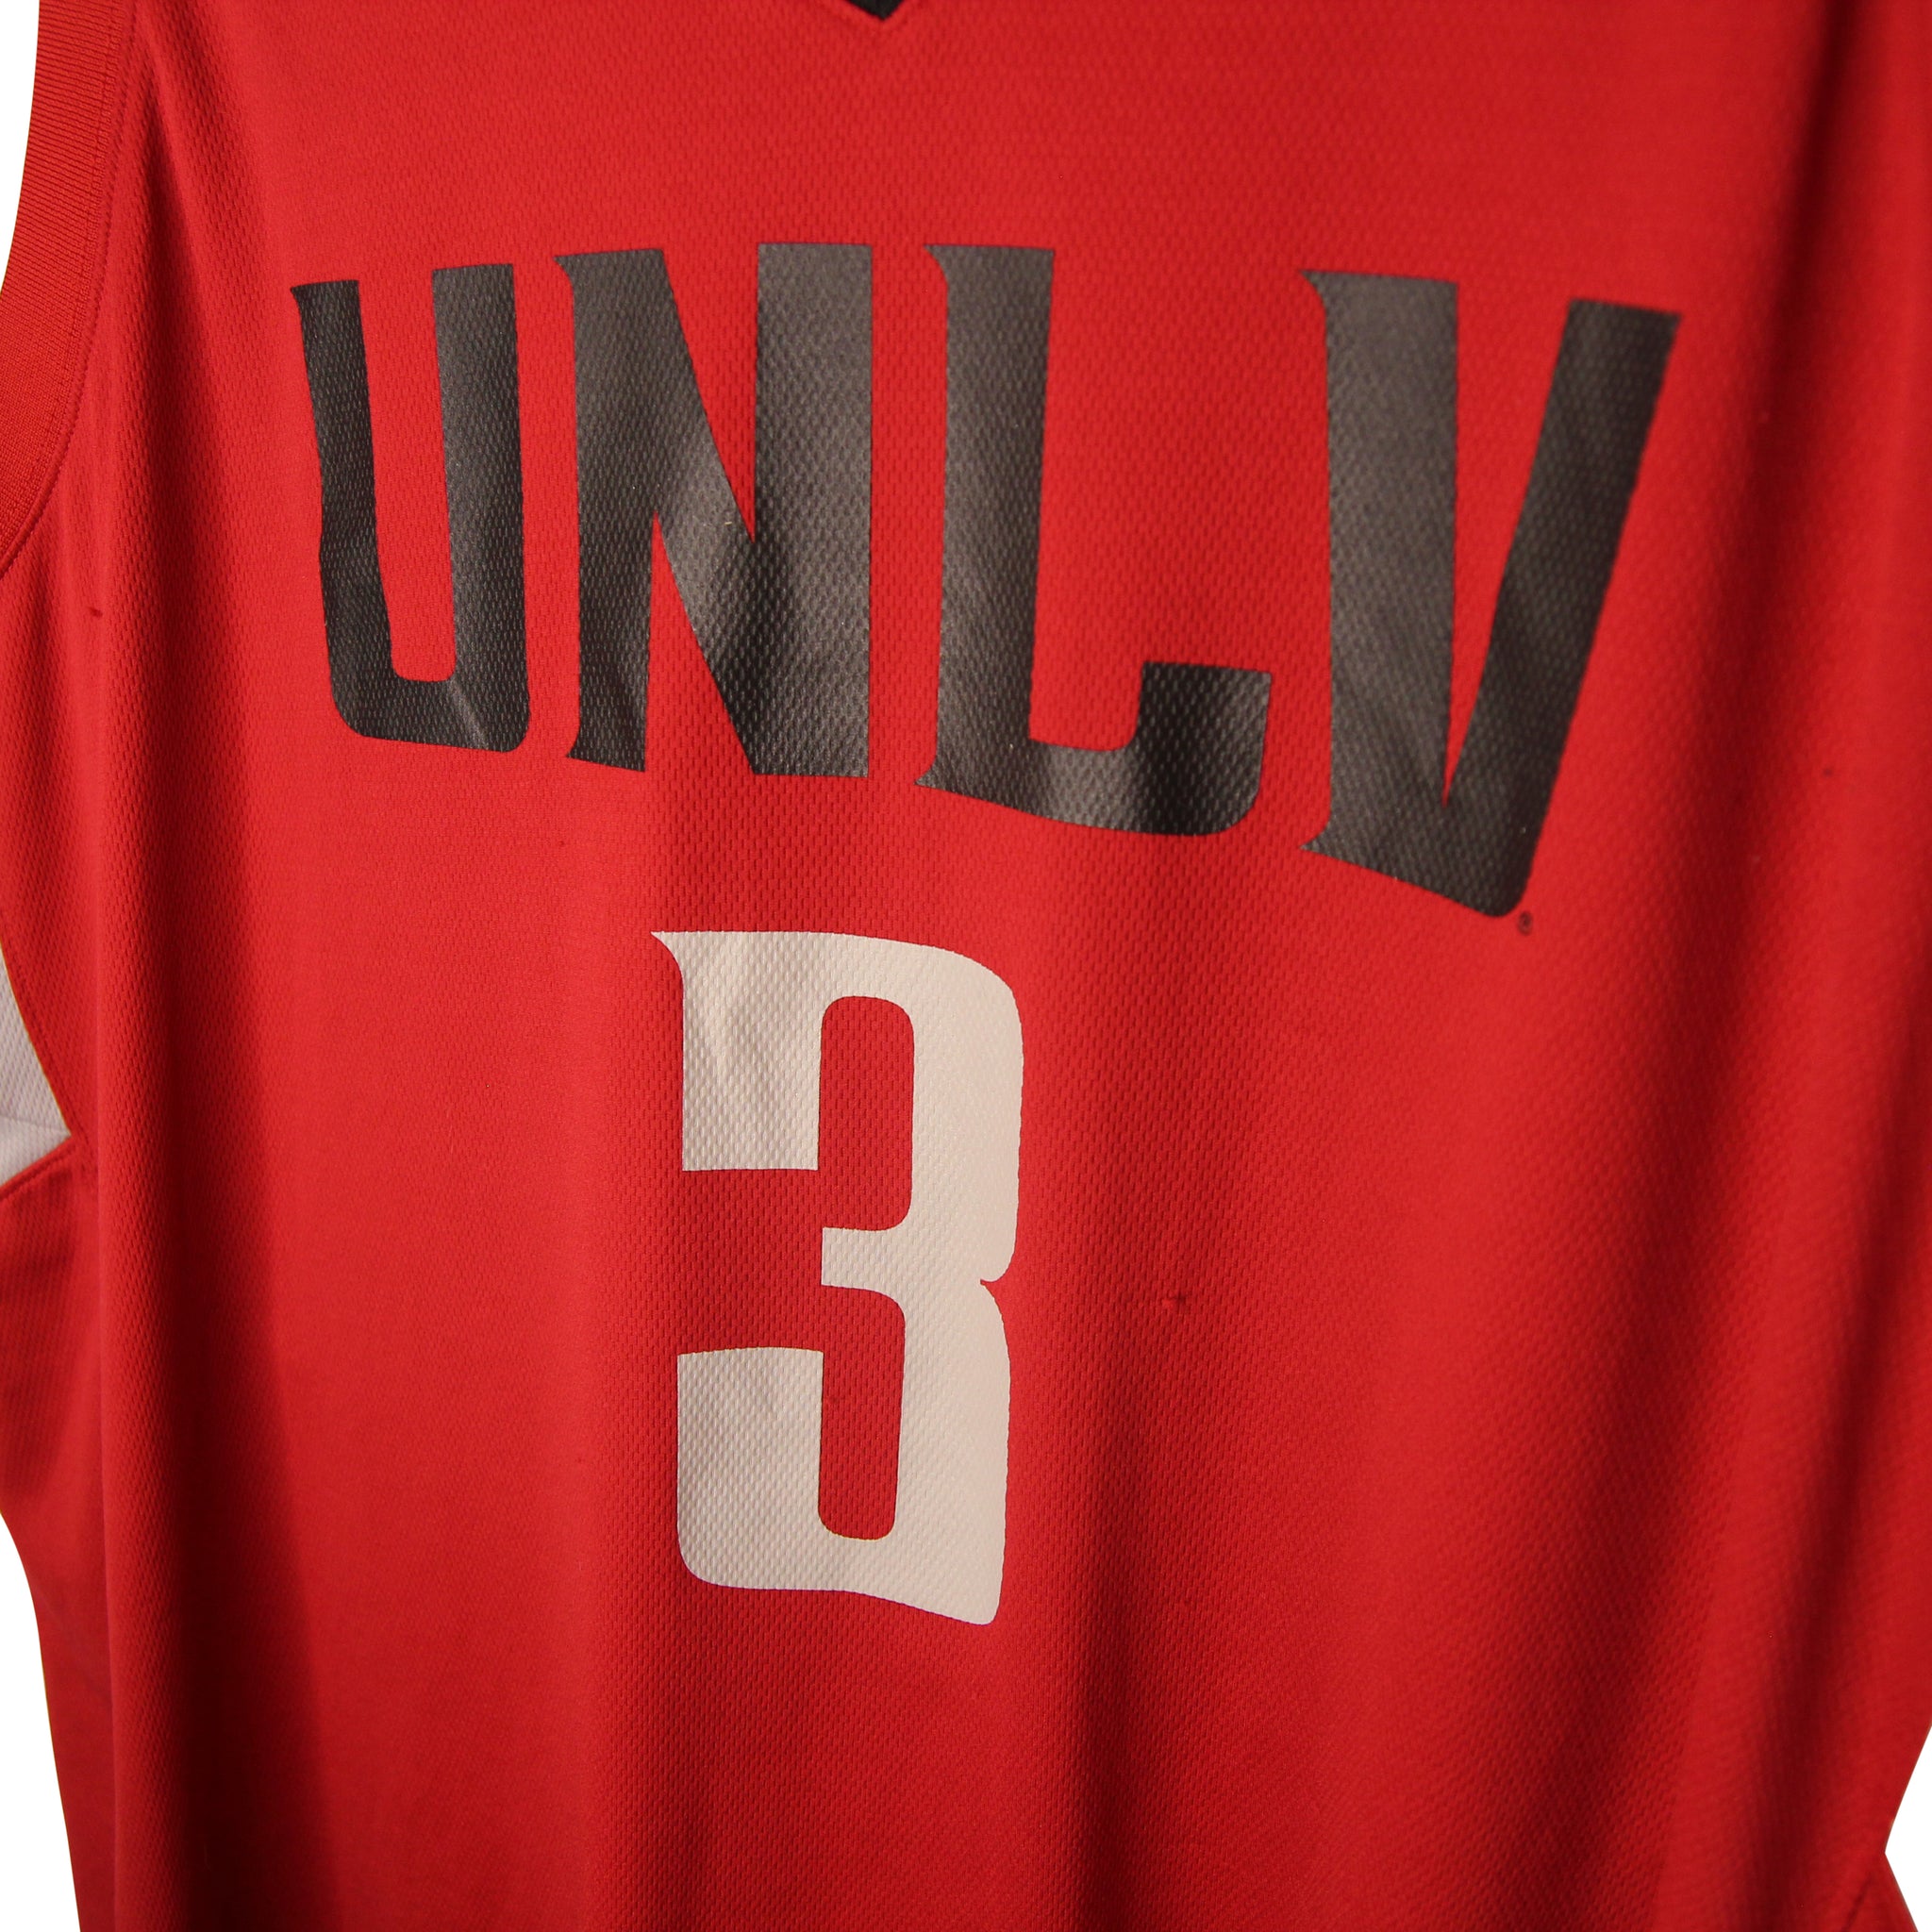 UNLV basketball jersey